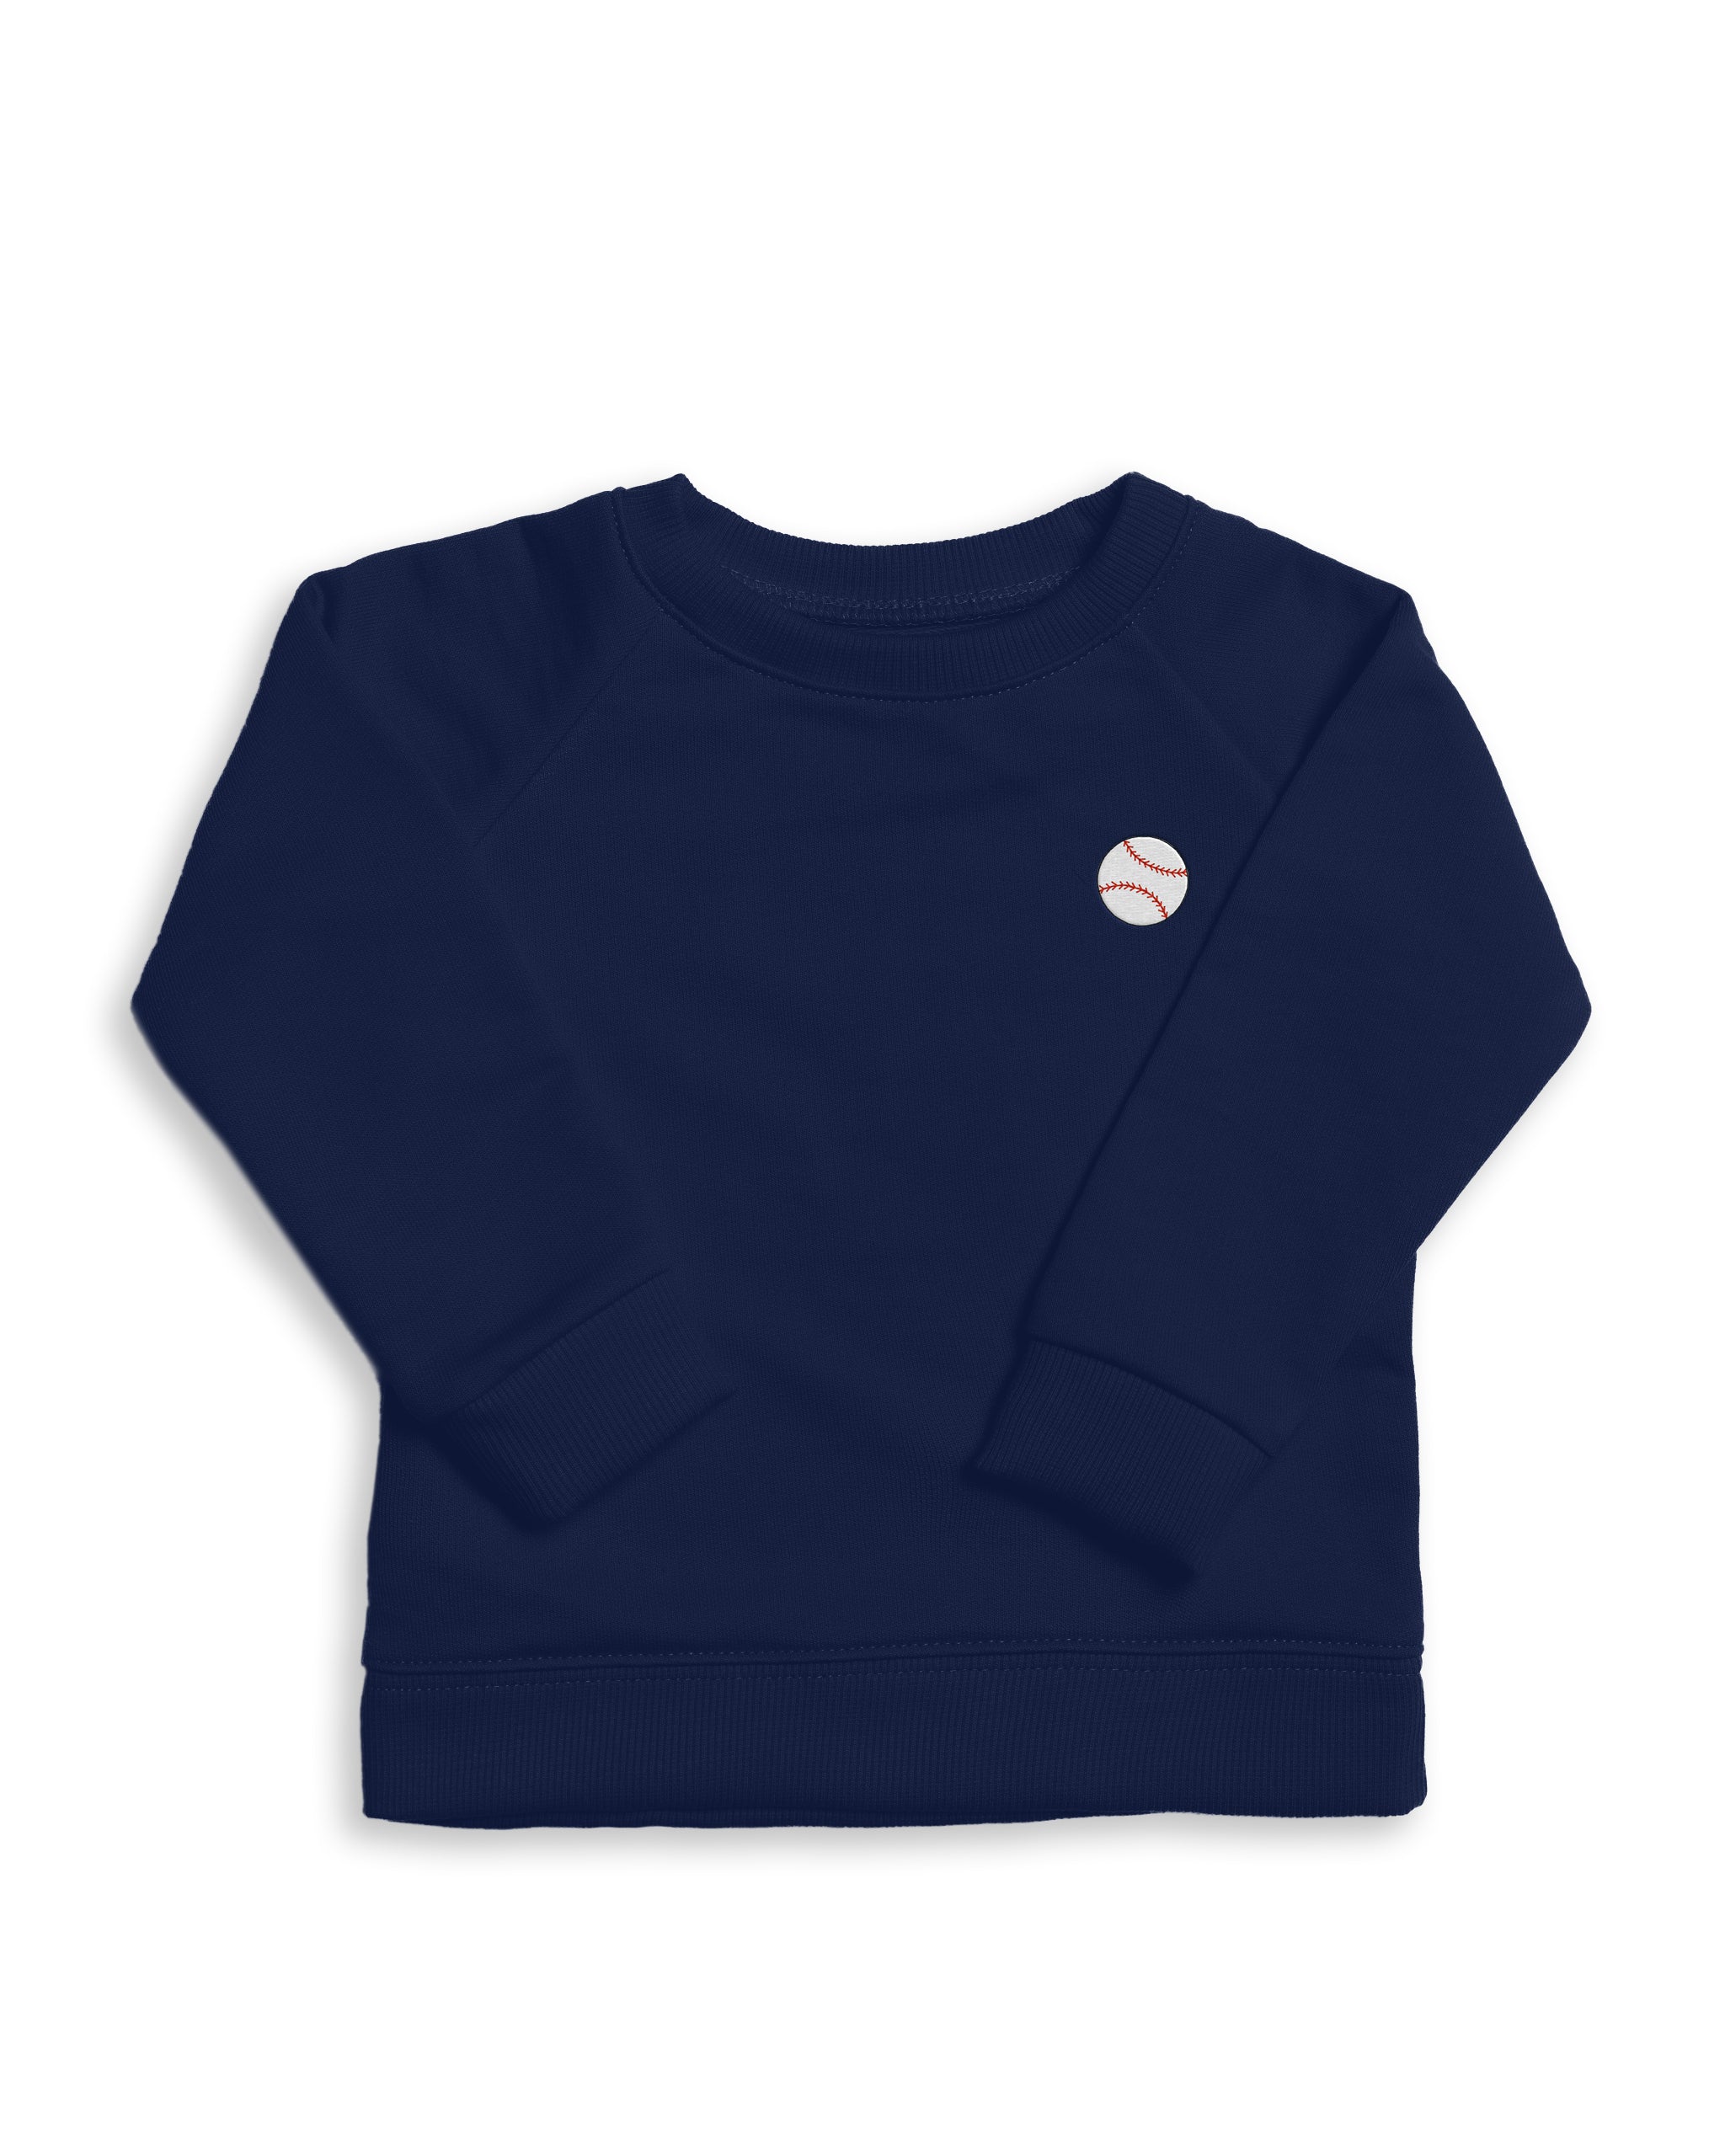 The Organic Embroidered Pullover Sweatshirt [Navy Baseball]